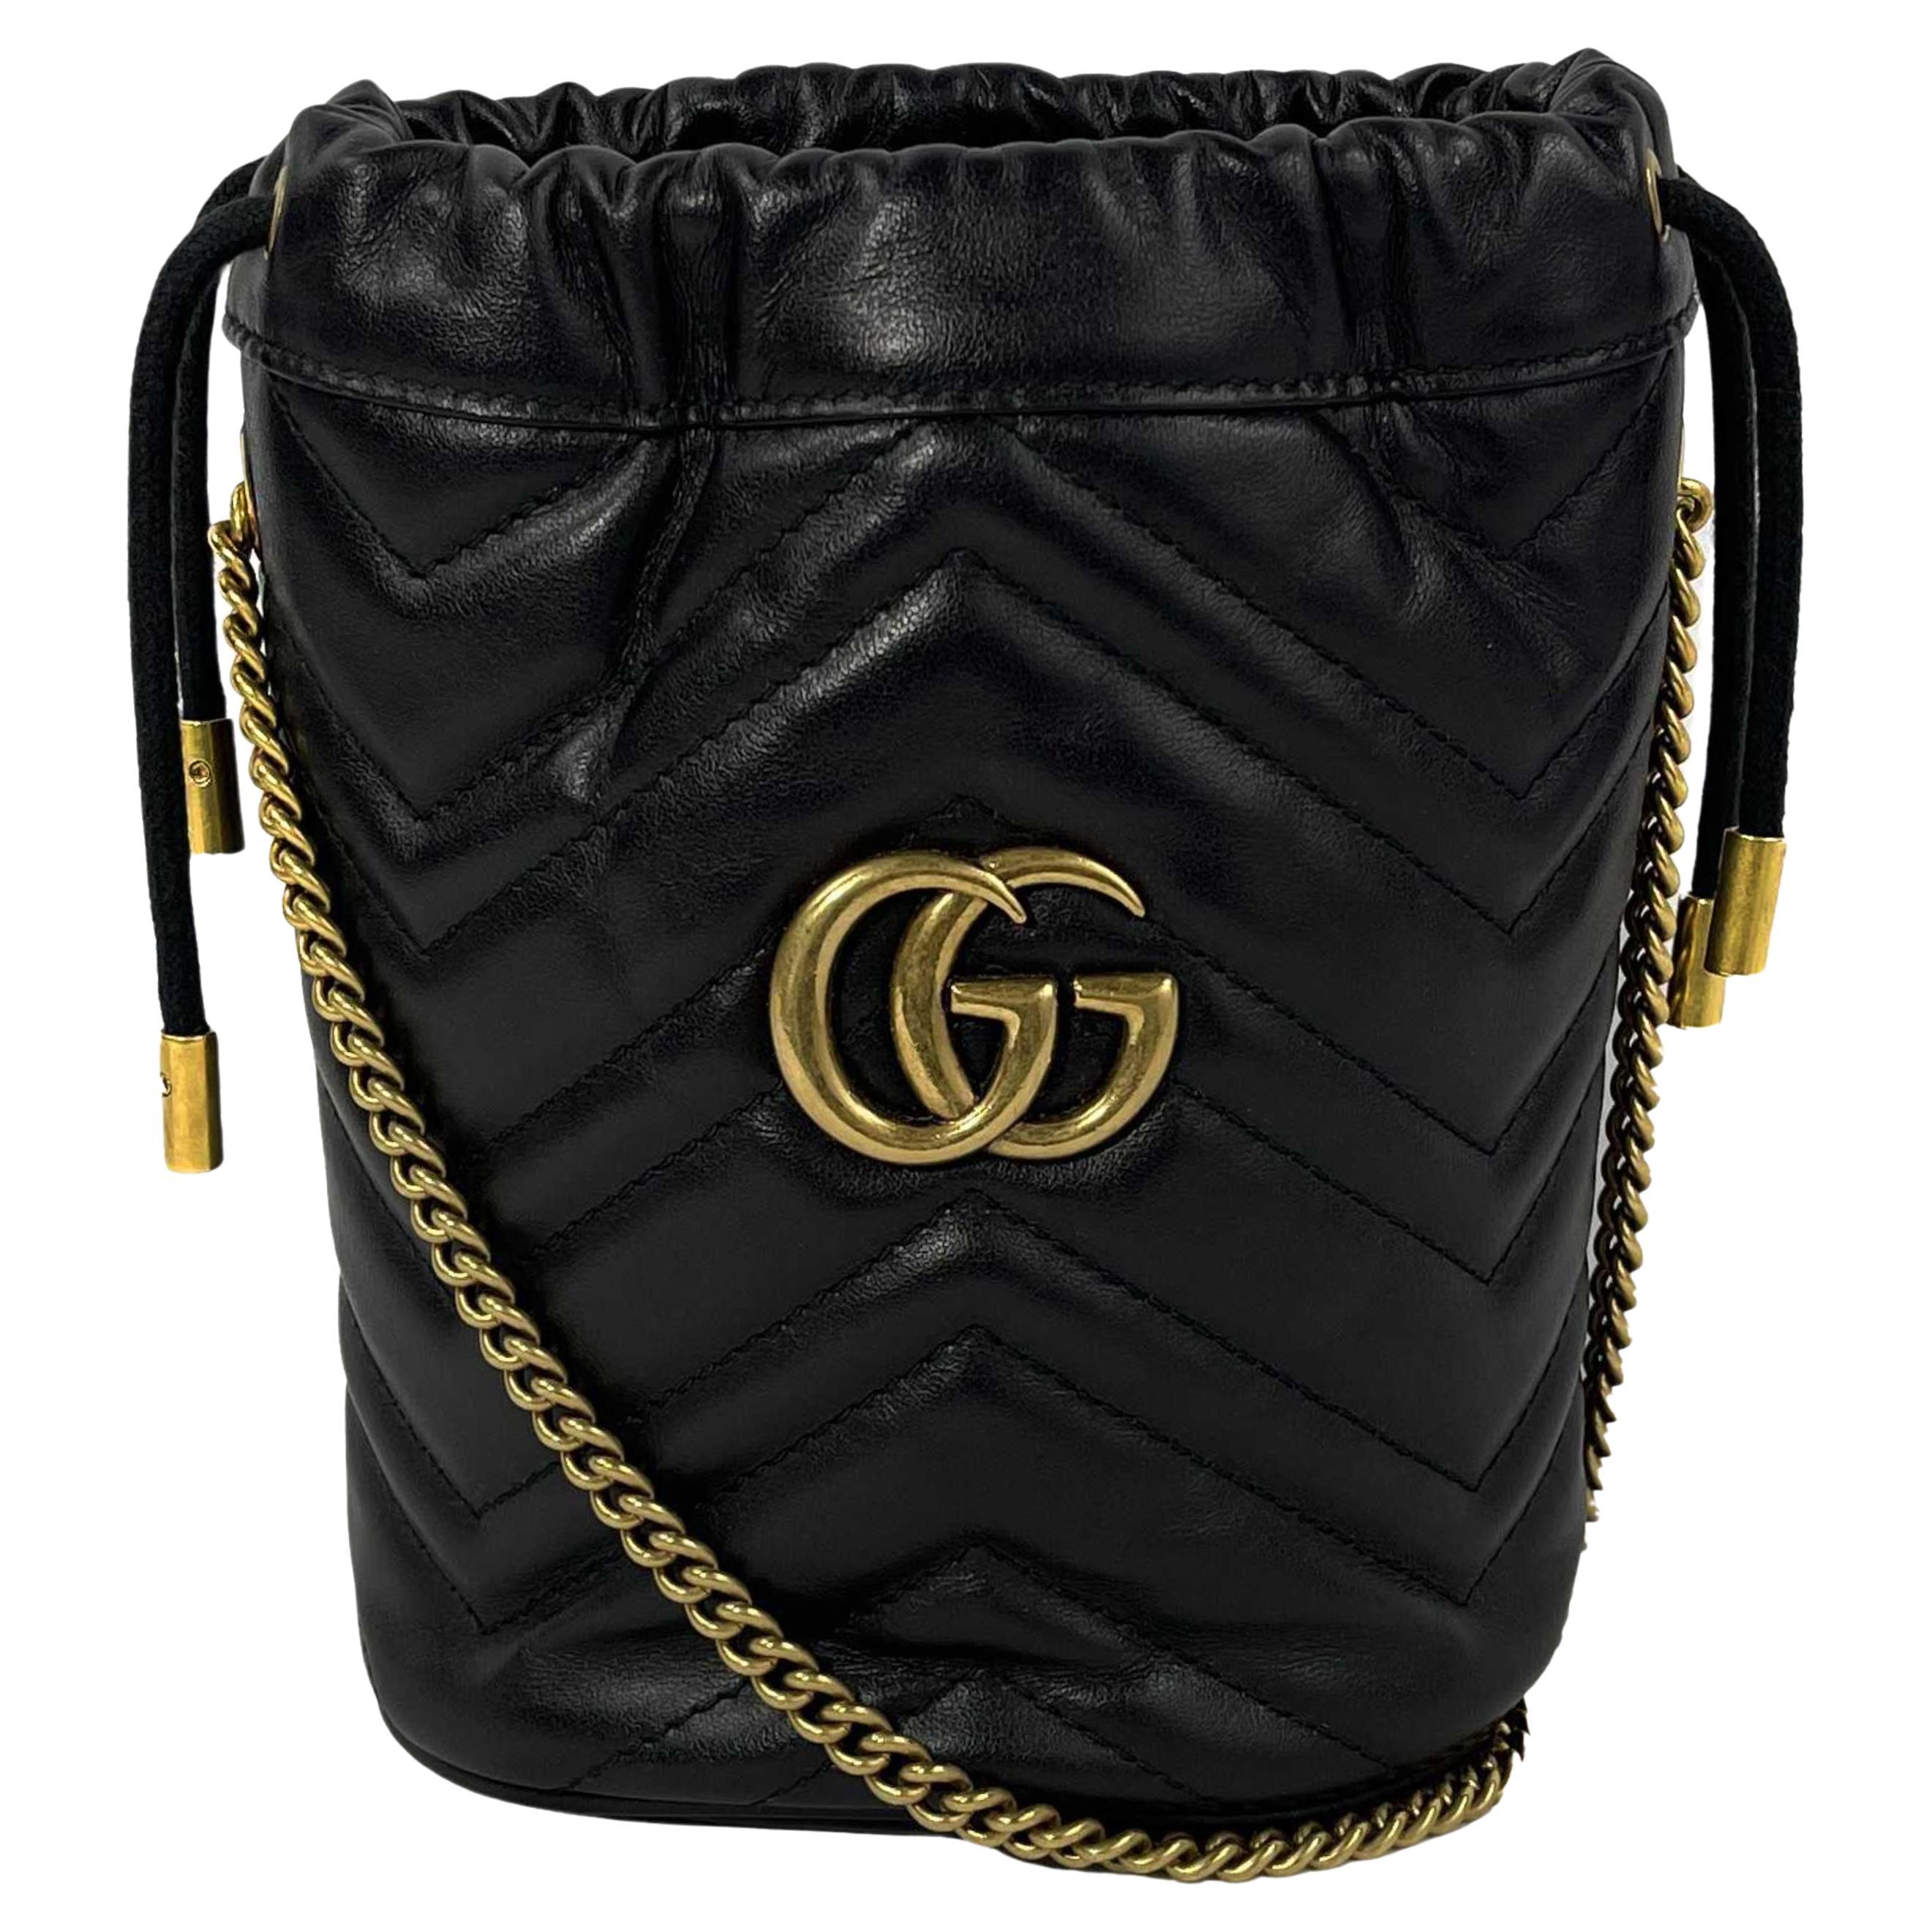 Gucci - Very Good - GG Marmont Bucket Bag Mini - Black - Handbag